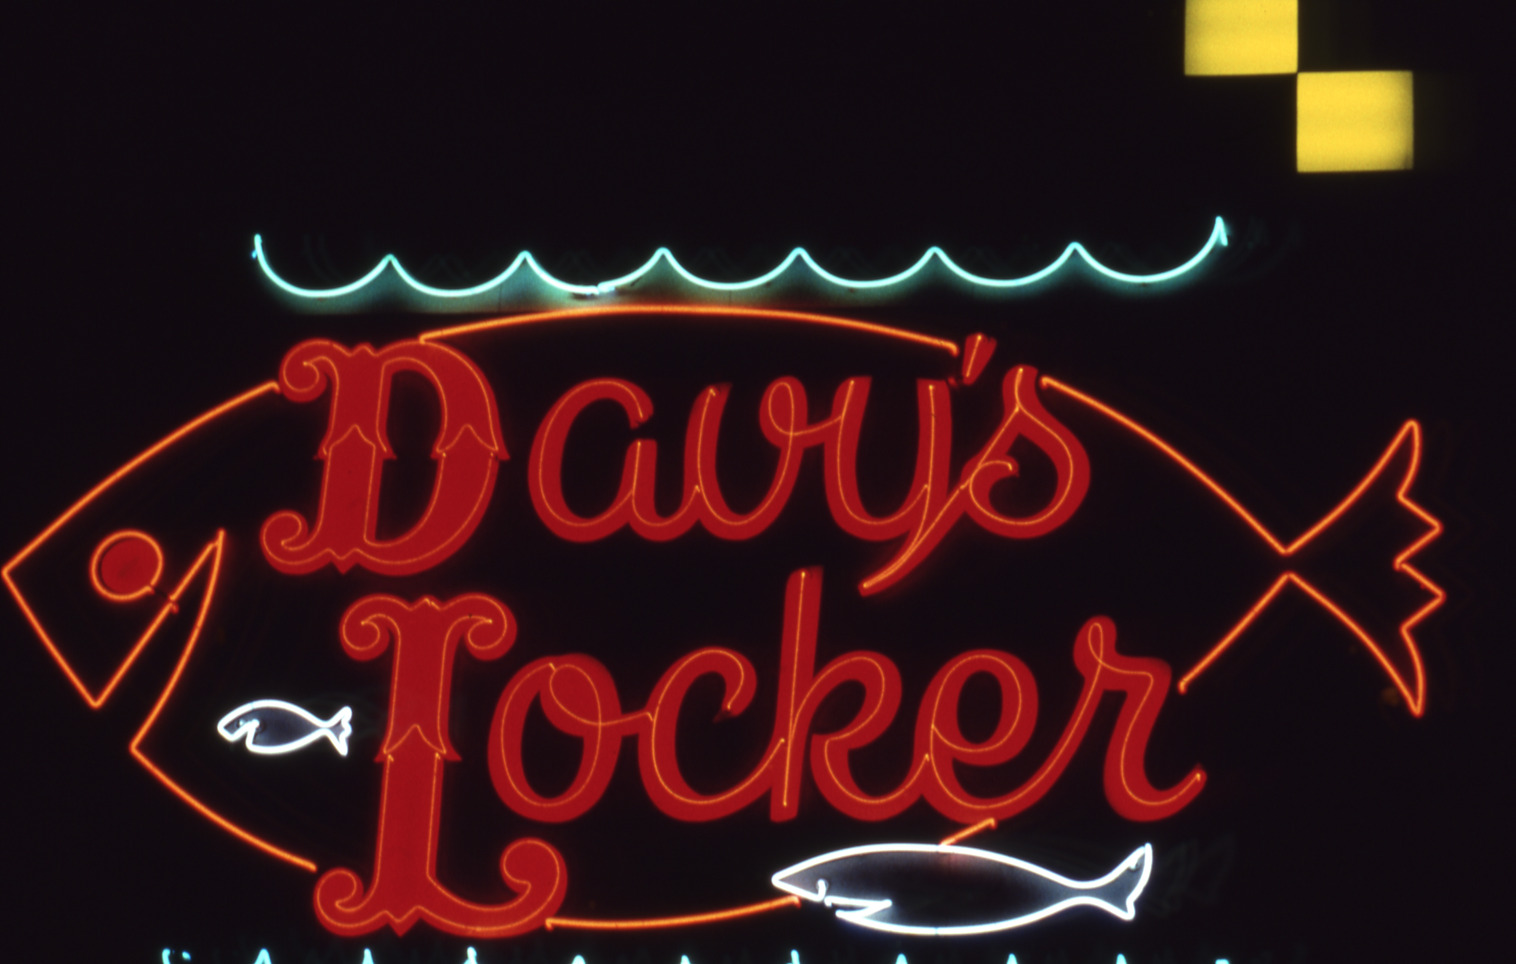 Davy's Locker sign, Las Vegas, Nevada: photographic print